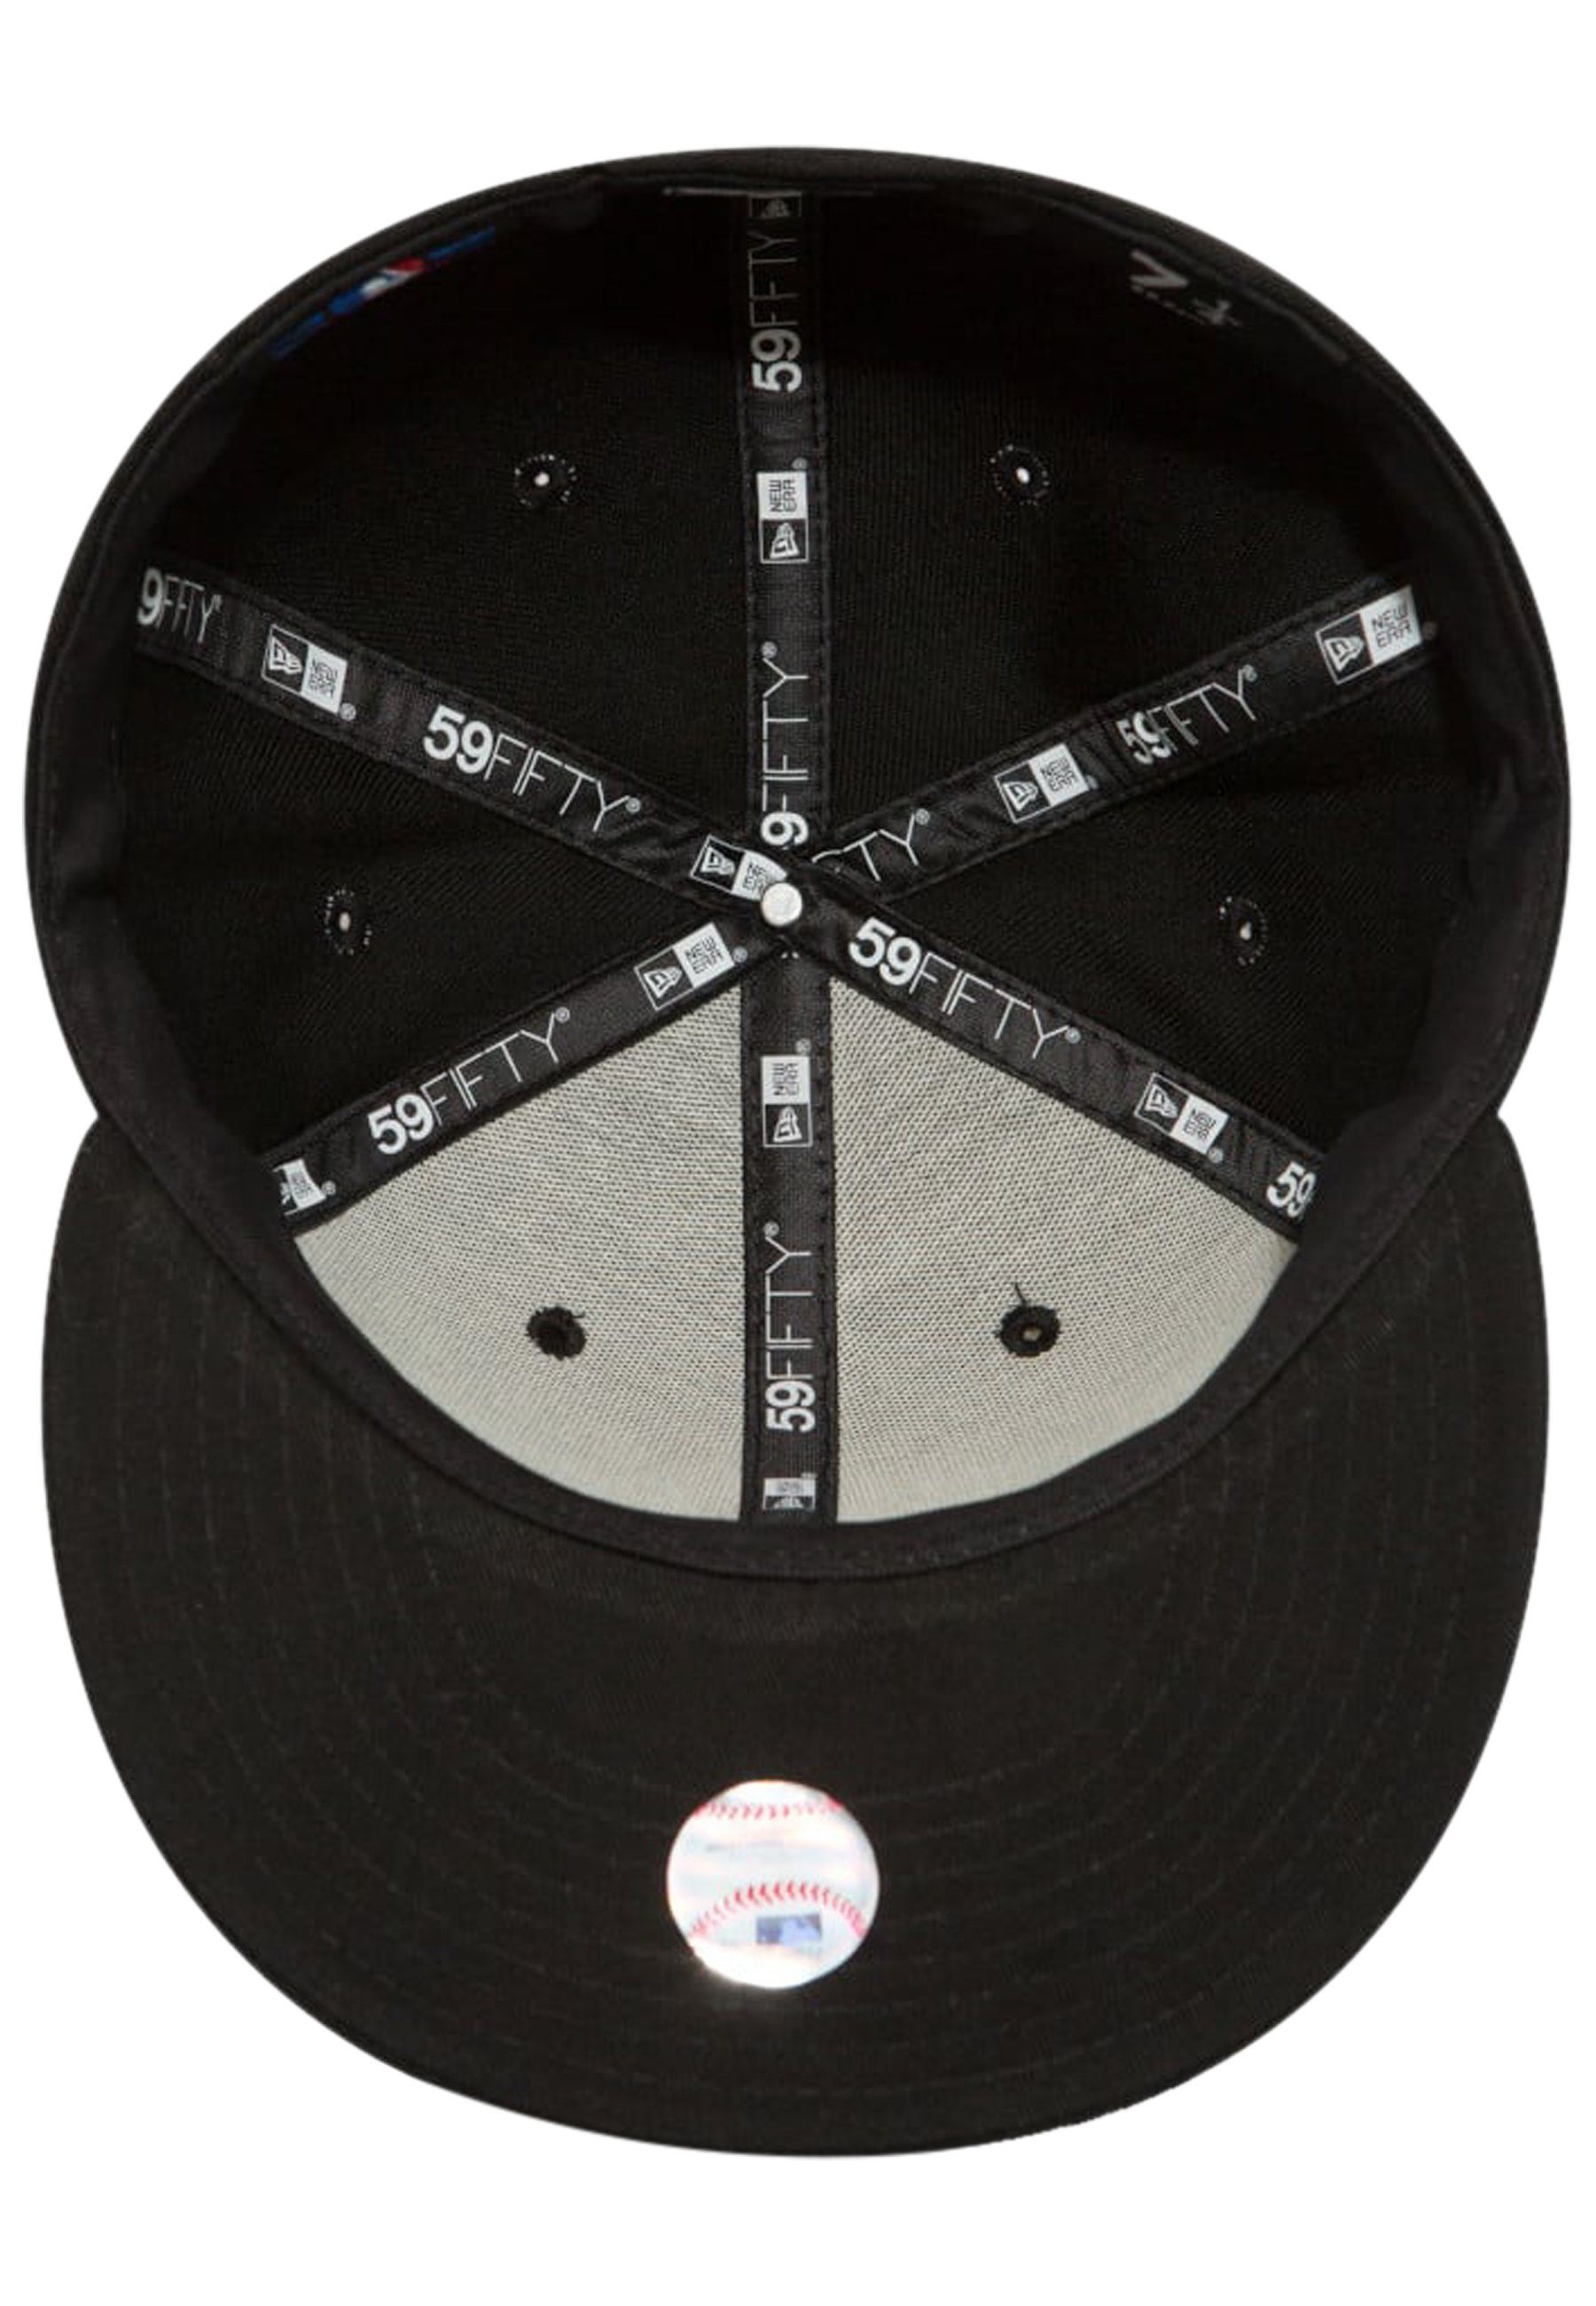 schwarz New (1-St) New Yankees York Snapback Cap Era 59Fifty